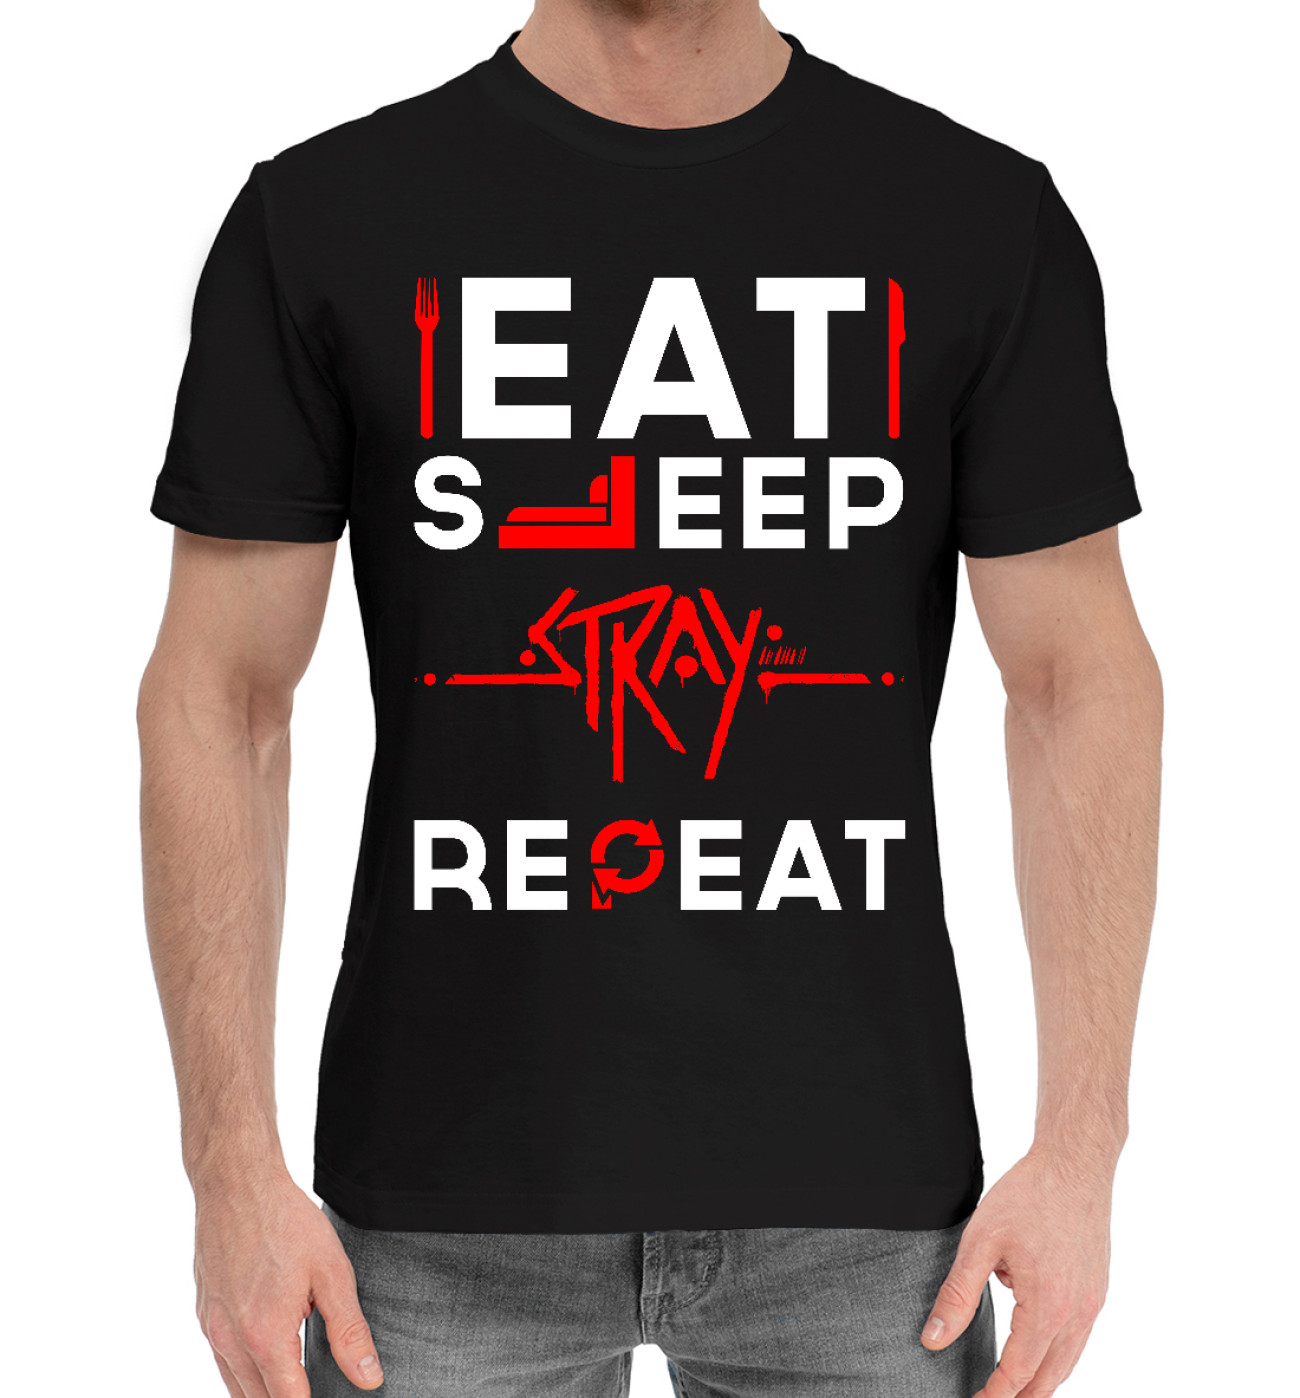 Мужская Хлопковая футболка Stray Routine, артикул: SSC-403967-hfu-2